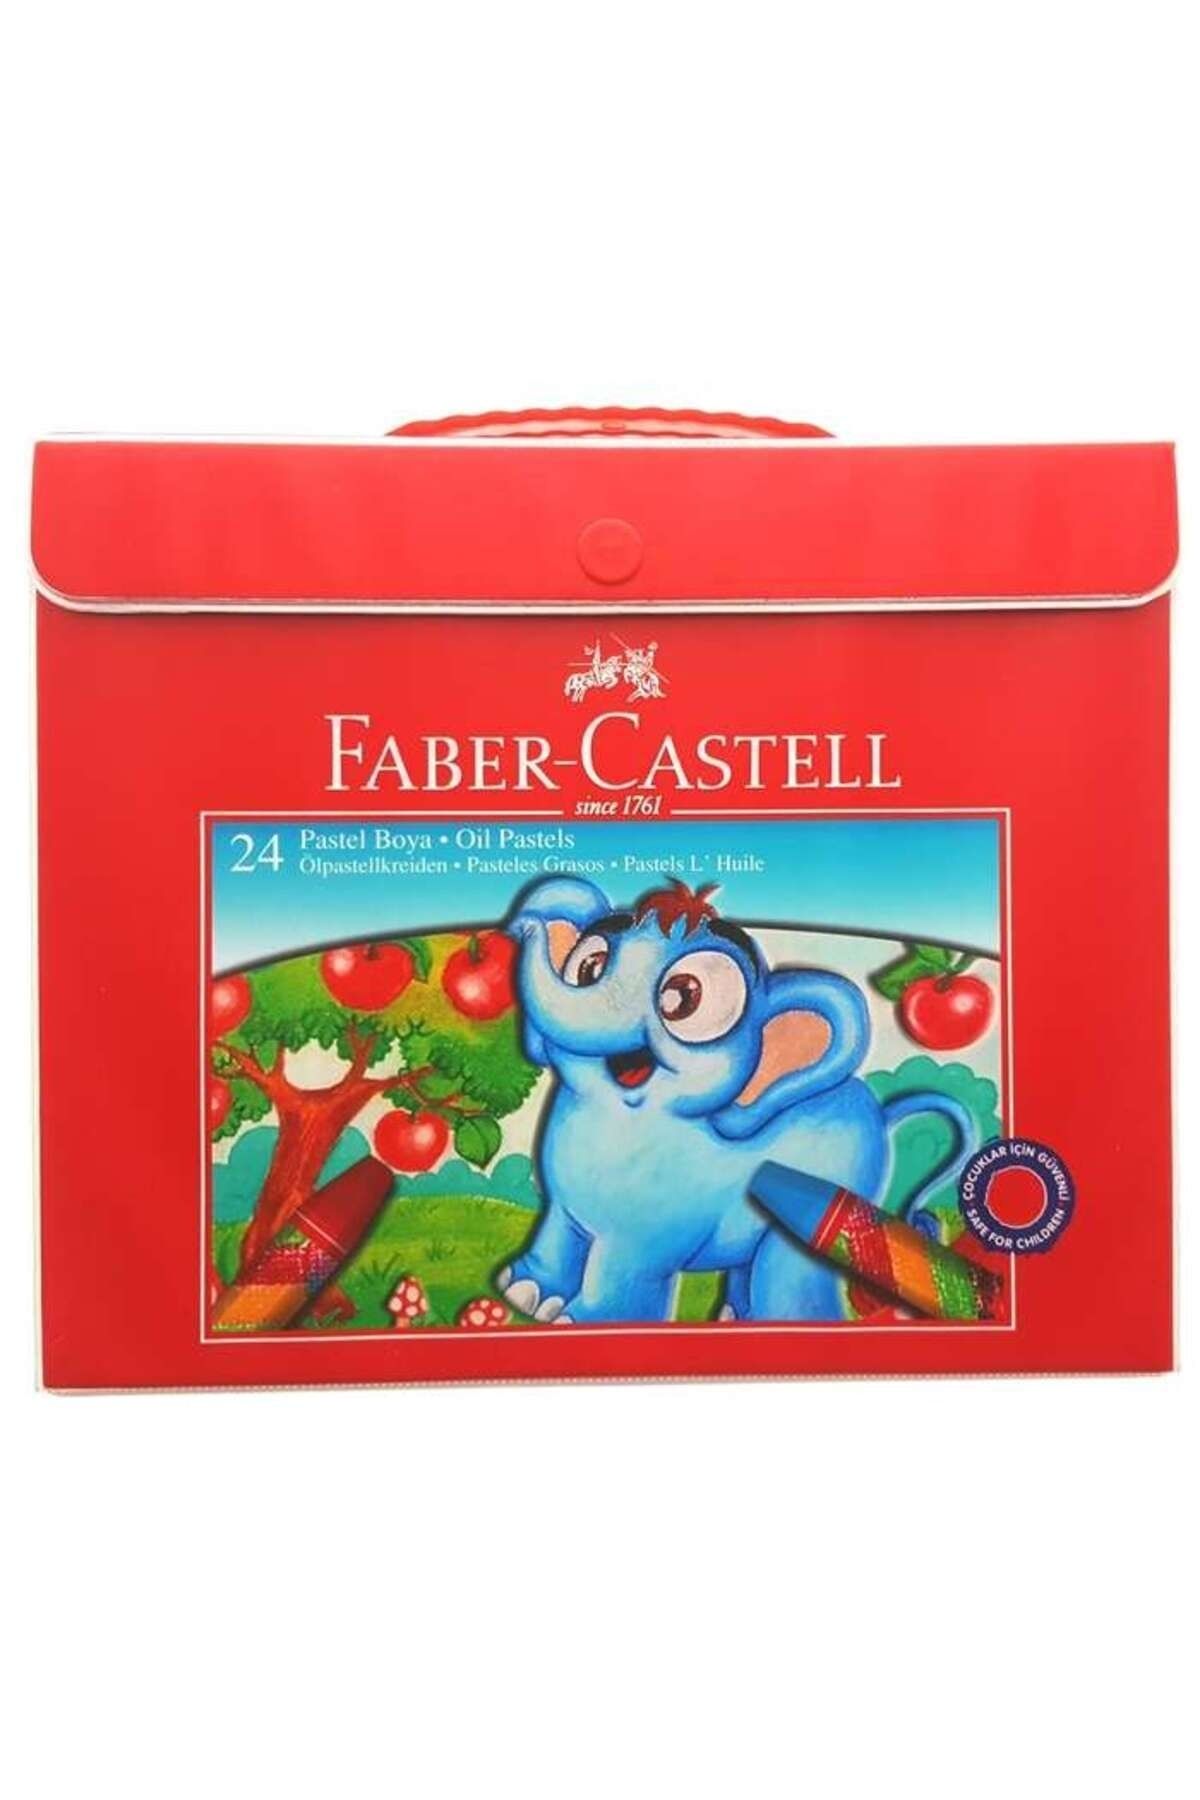 Faber Castell Pastel Boya Seti Red Line 24lü N5281125124 Çantalı